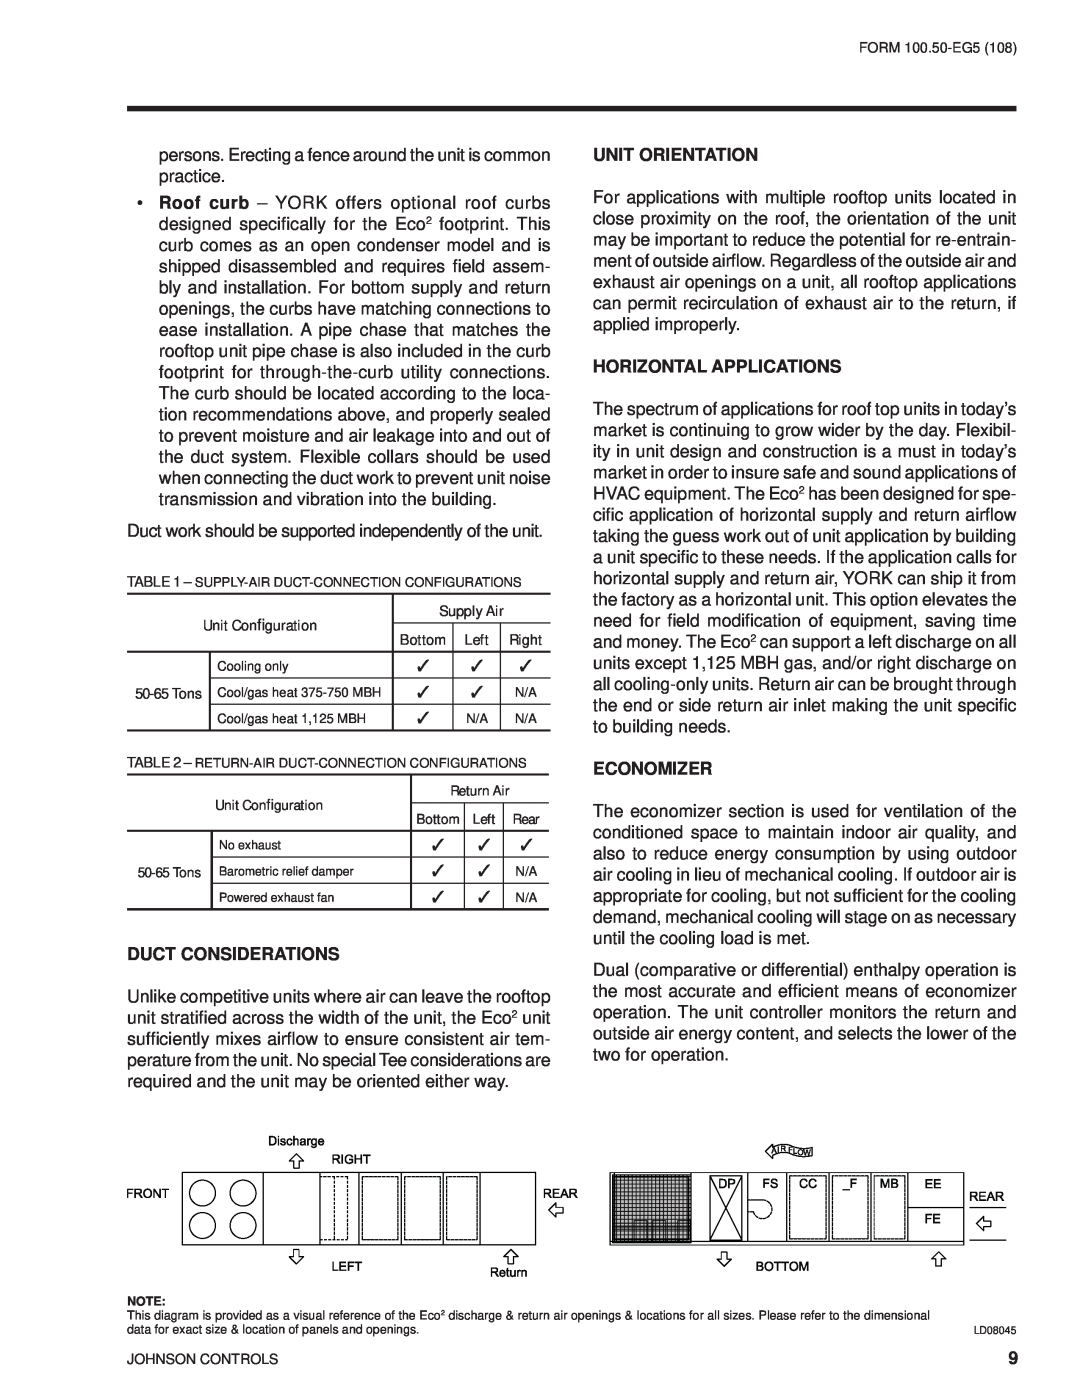 York HFC-410A Duct Considerations, Unit Orientation, Horizontal Applications, Economizer, Unit Conﬁguration, Bottom, Left 